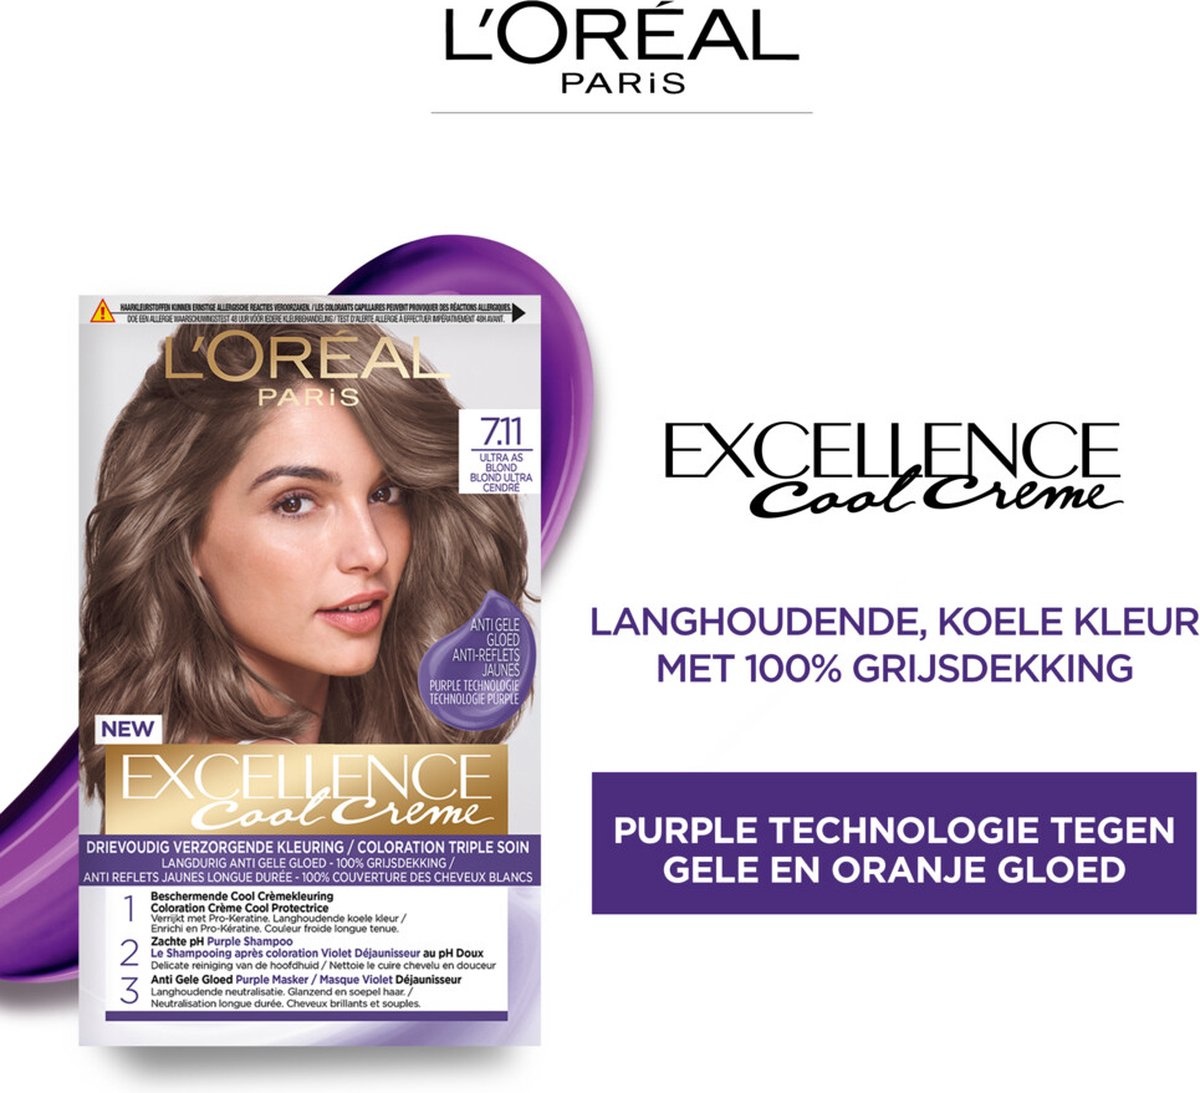 L'Oréal Paris Excellence Cool Creams 5.11 - Ultra Ash Light Brown - Permanent hair dye - Packaging damaged